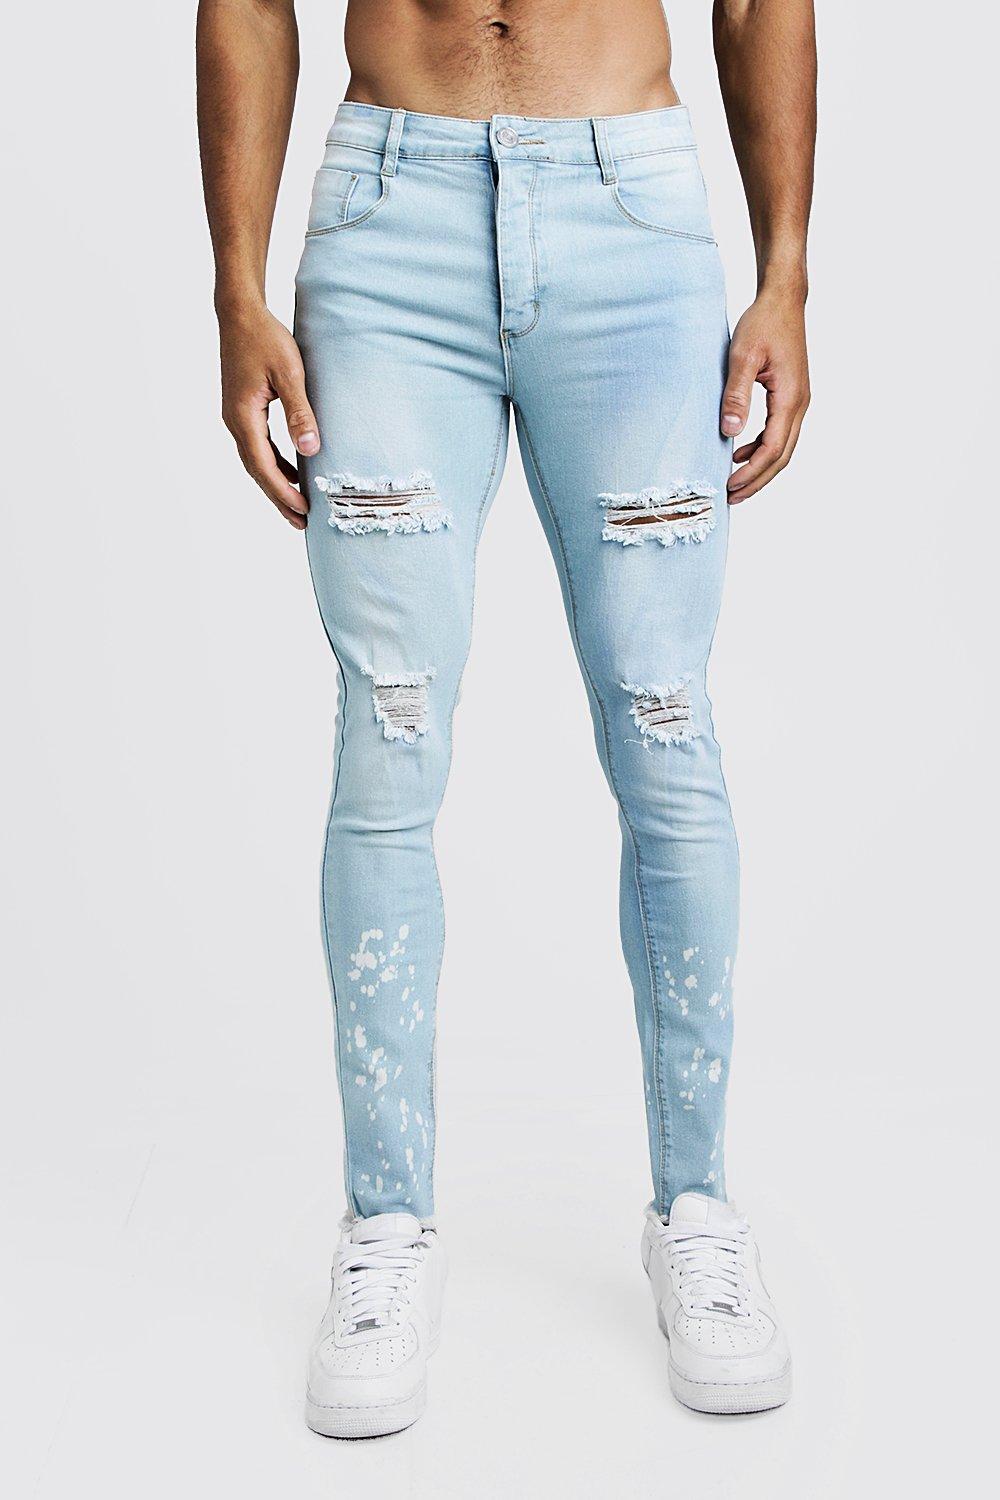 skinny light blue ripped jeans